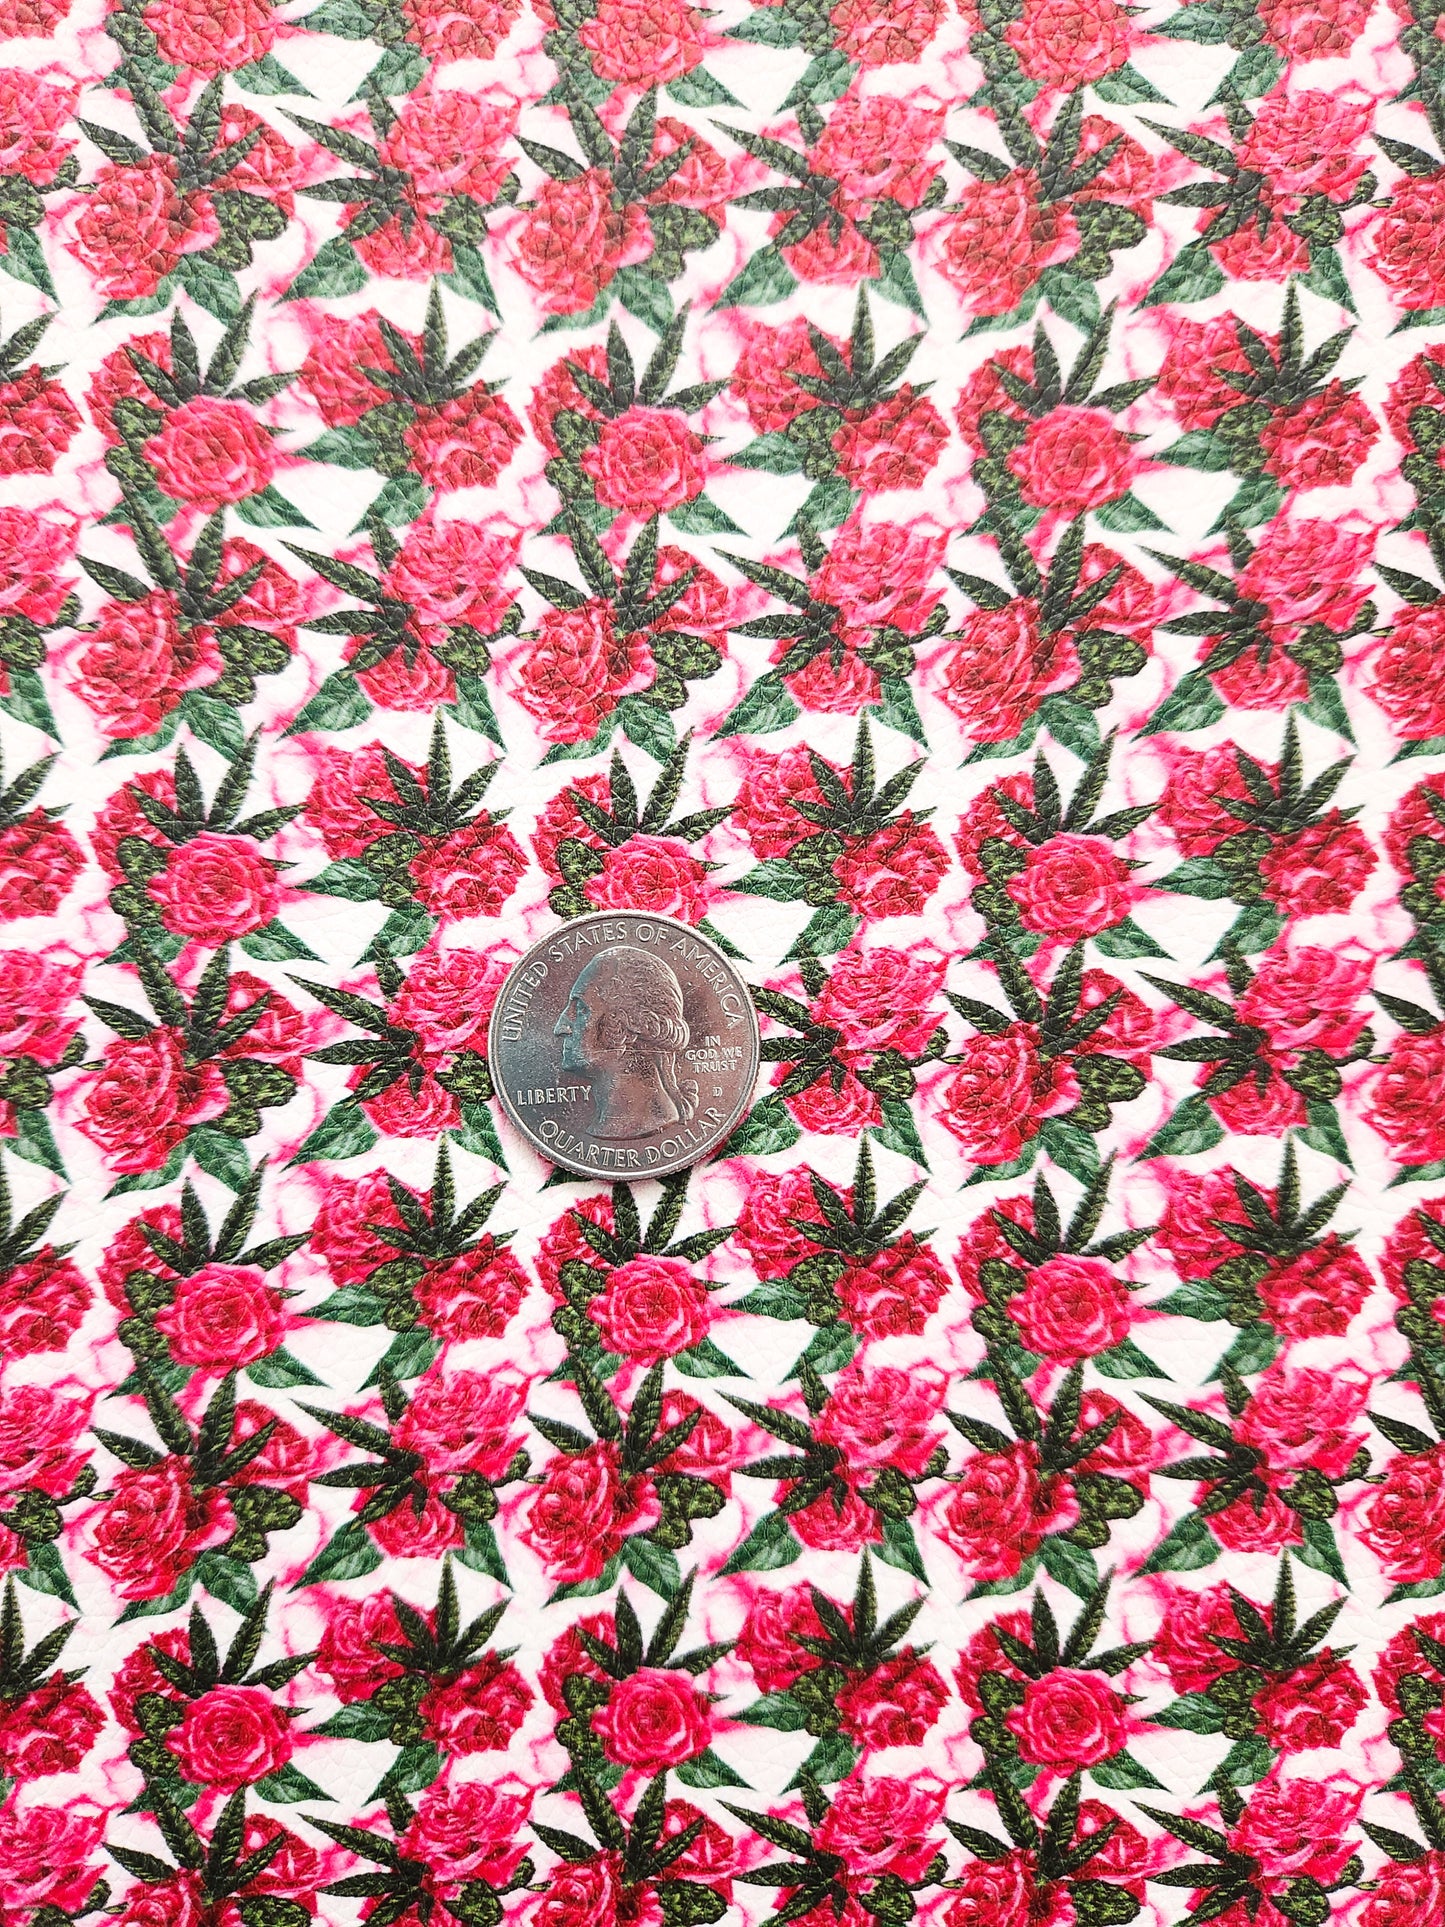 Marijuana Roses 9x12 faux leather sheet